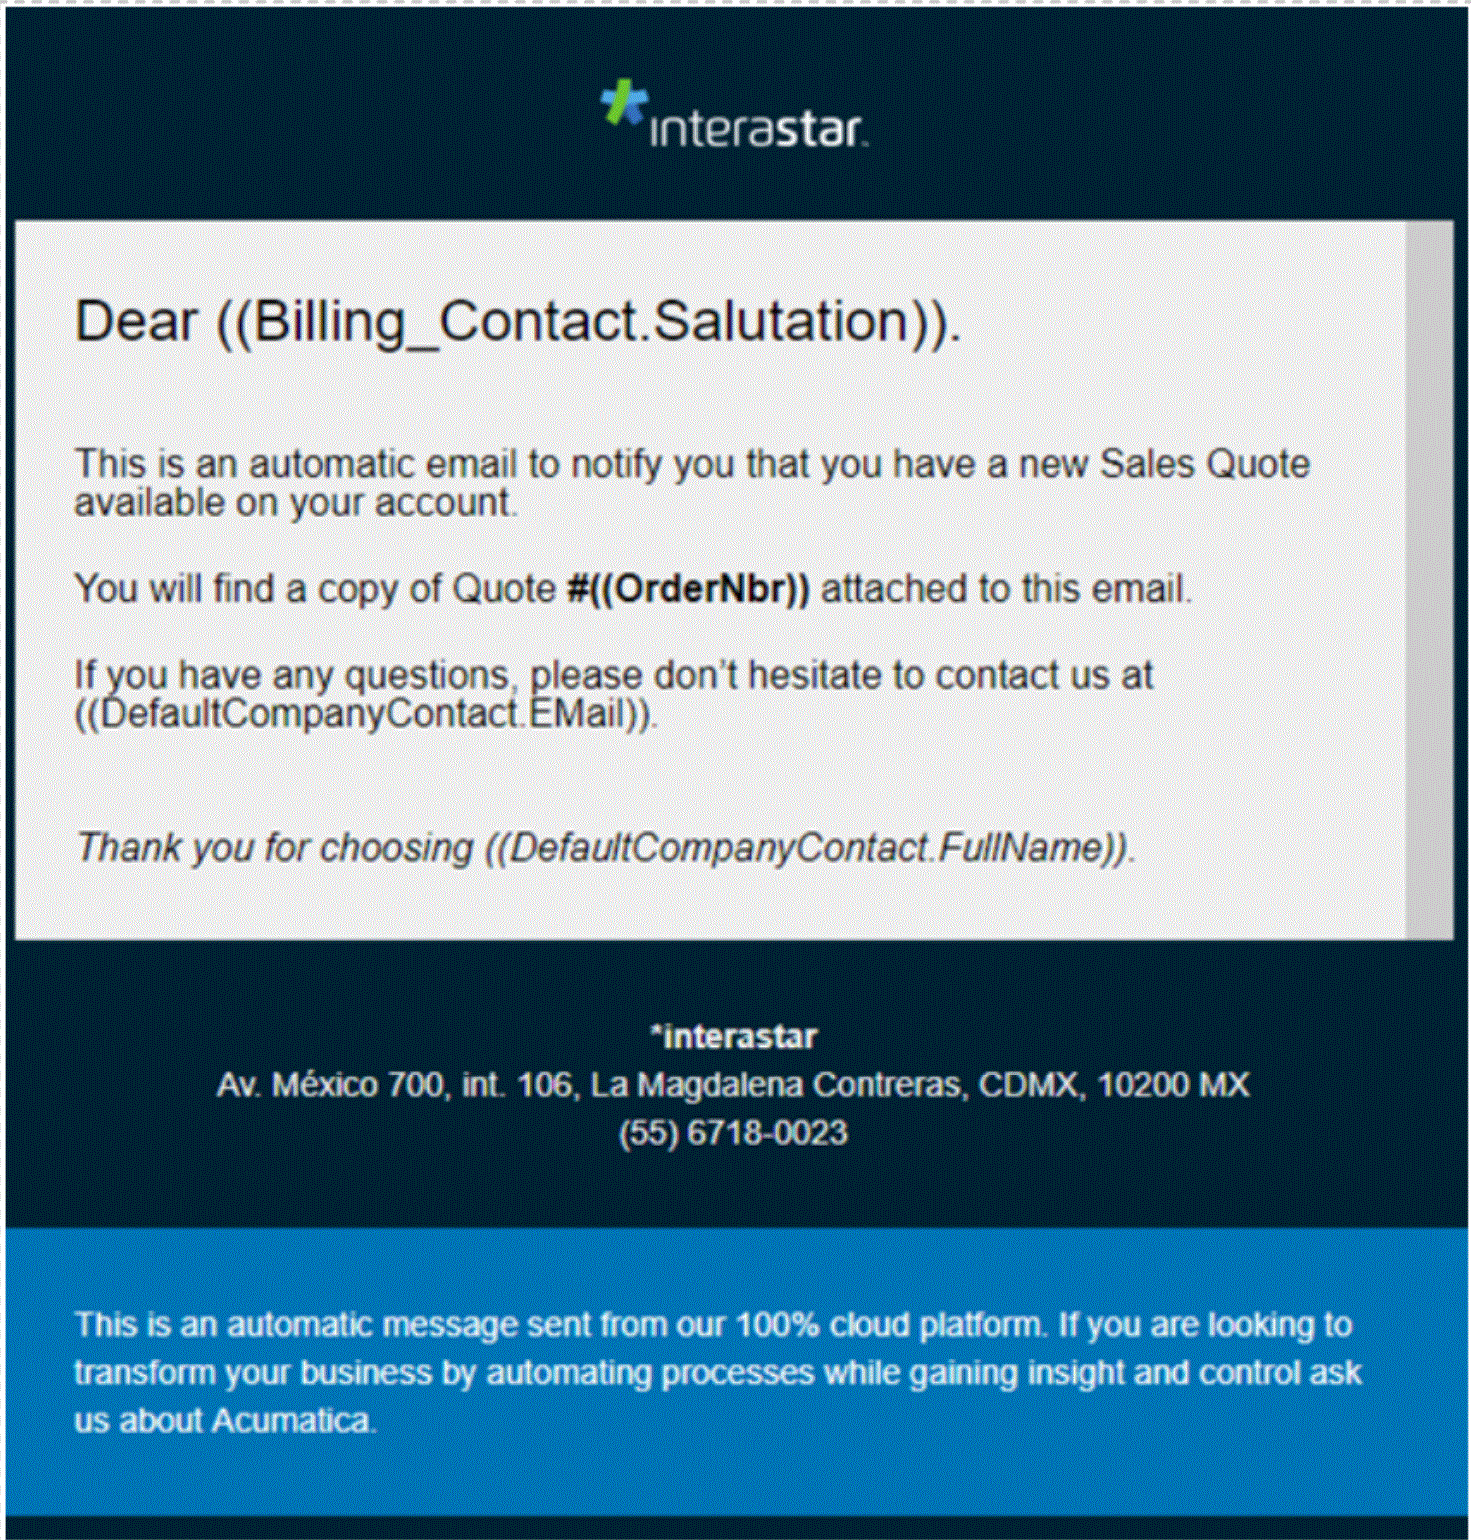 Dear Billing Contact Salutation.